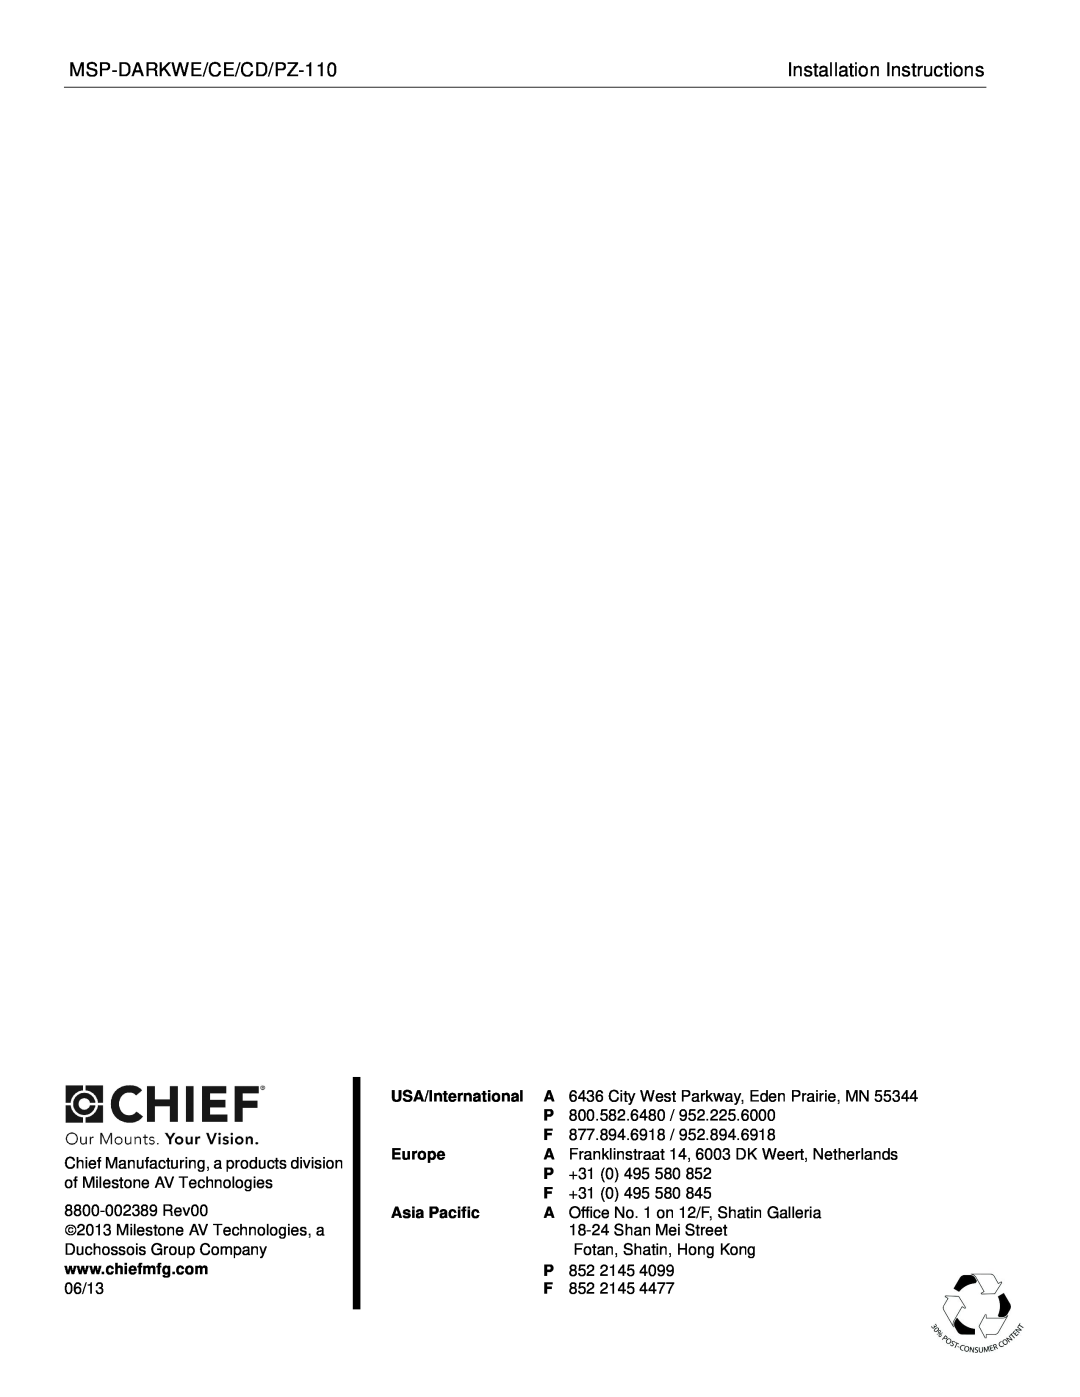 Chief Manufacturing MSP-DARKWE/CE/CD/PZ-110 manual Installation Instructions, 8800-002389 Rev00, 06/13 